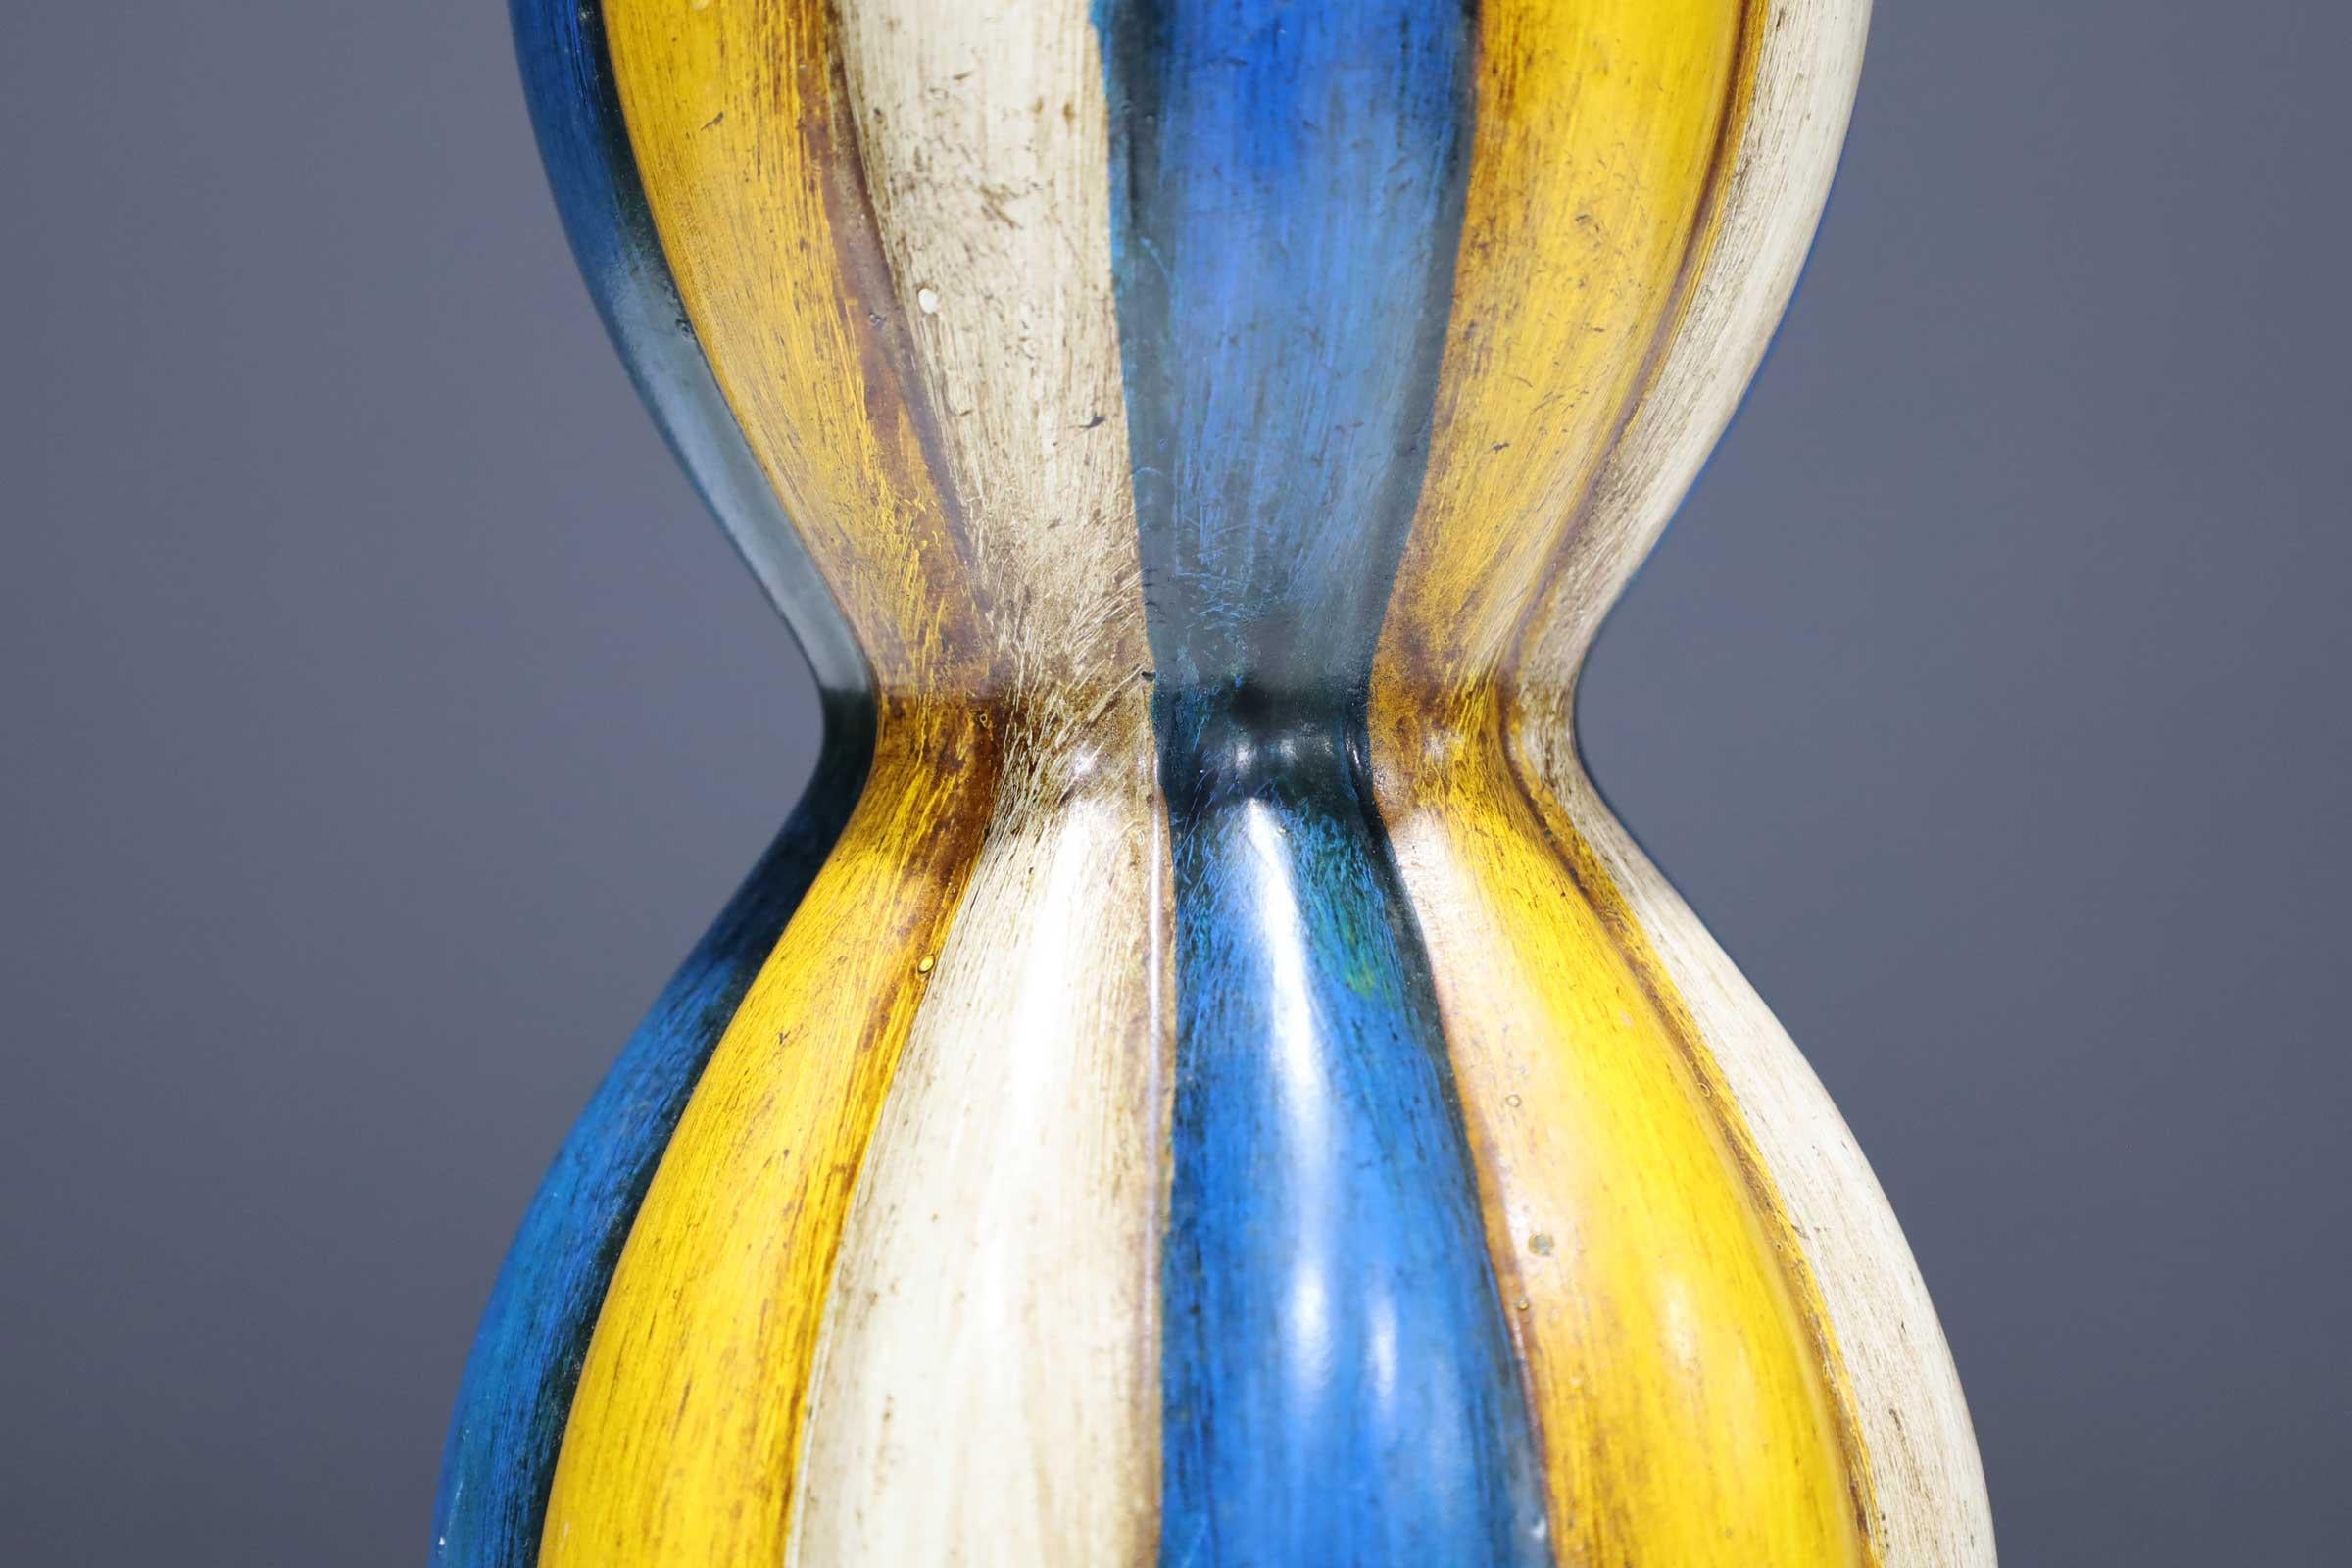 Beautiful colors on this ceramic gourd vase.